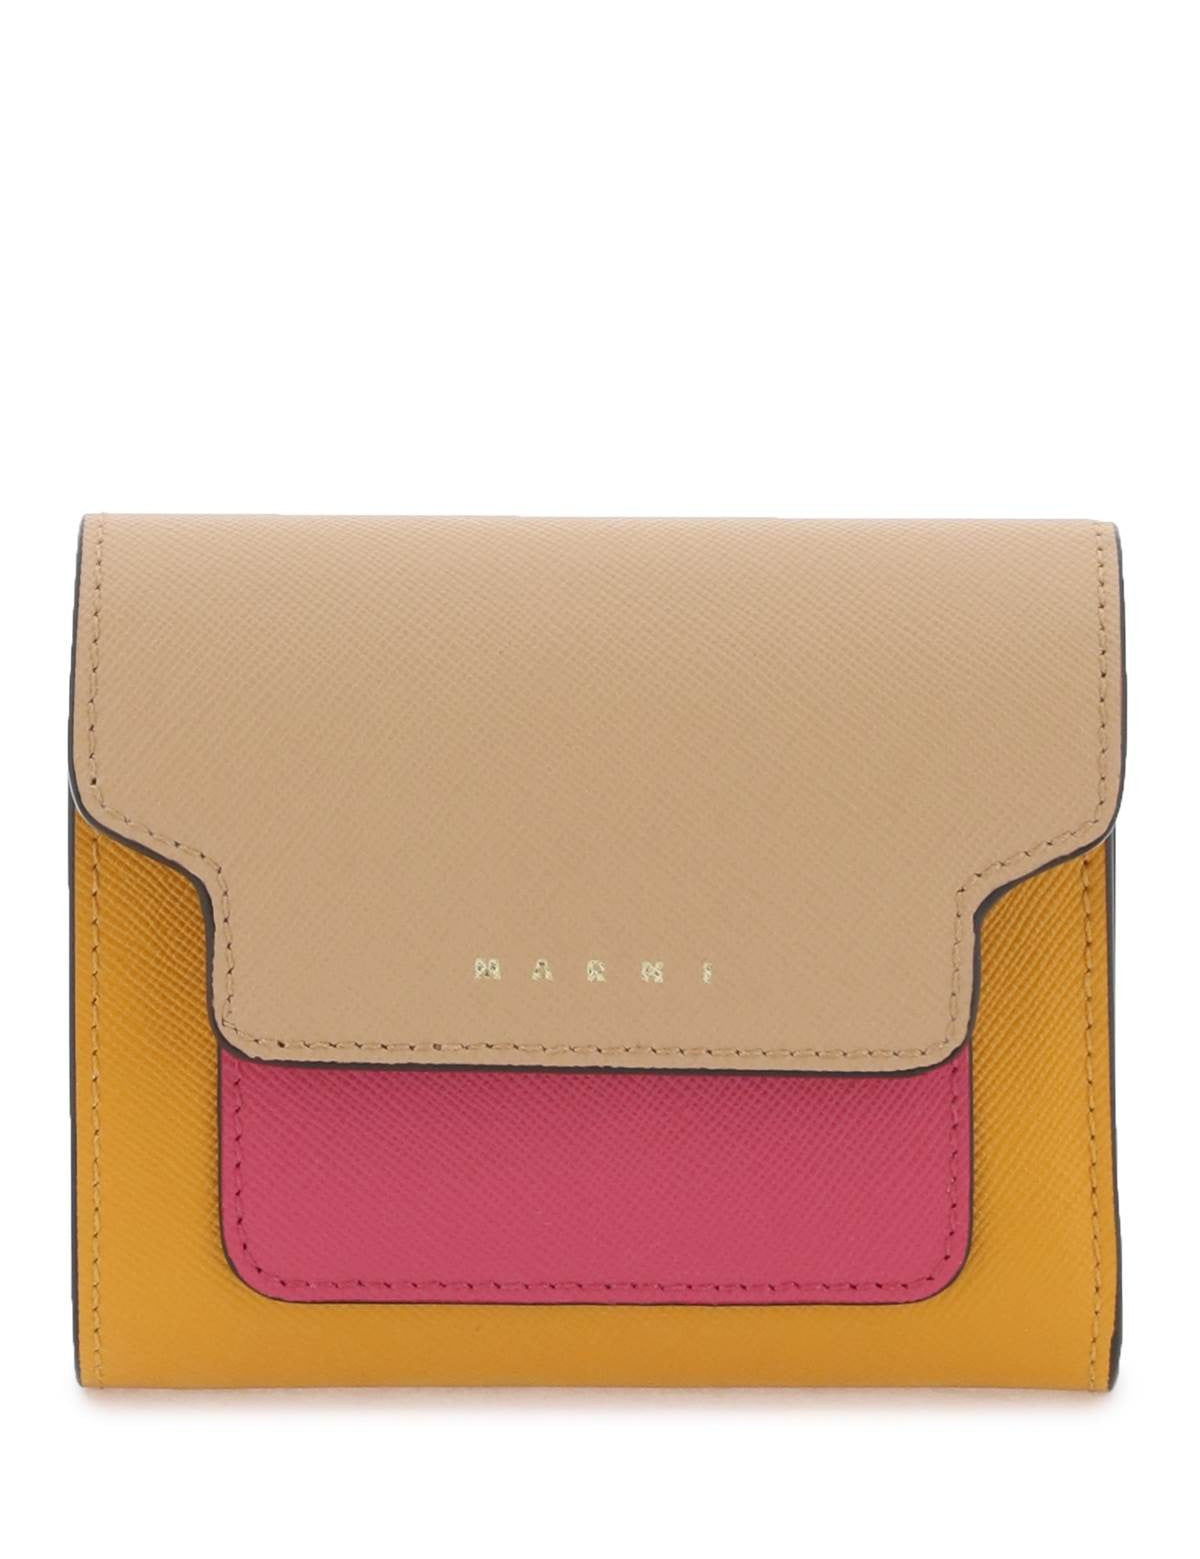 marni-bi-fold-wallet-with-flap.jpg